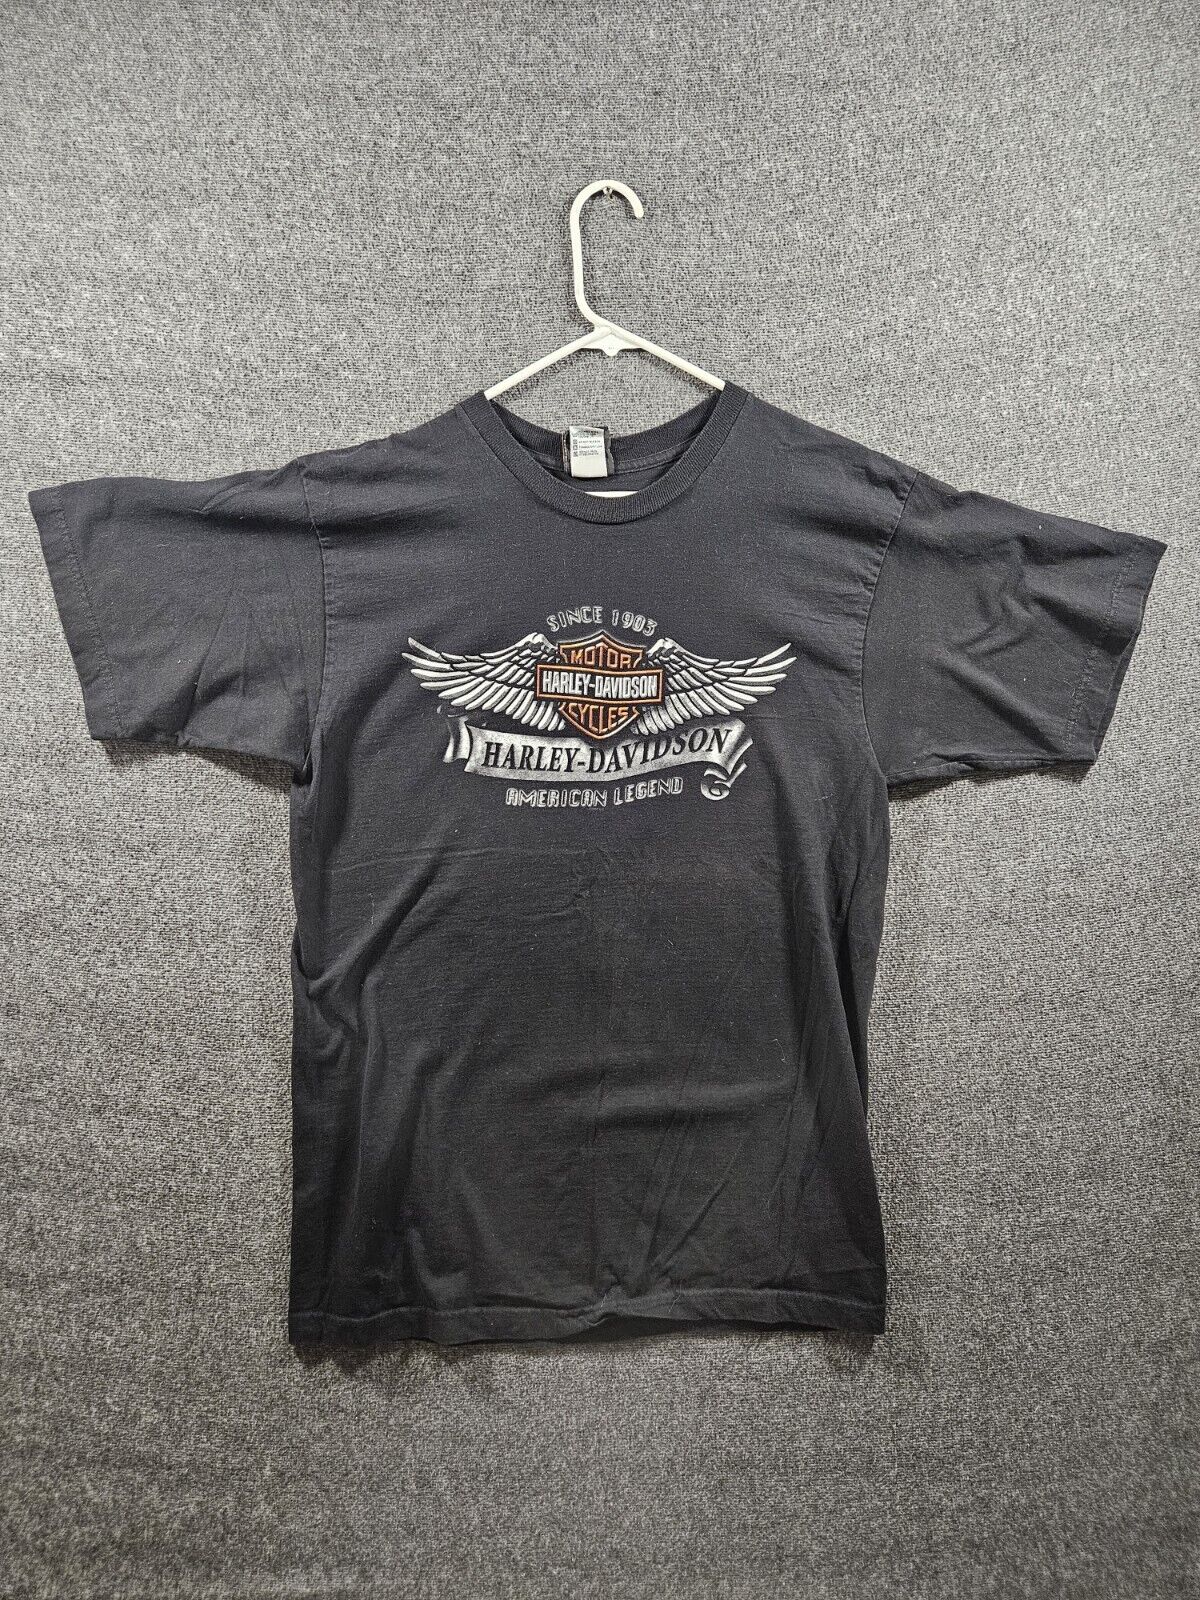 Vintage Men\'s Harley-Davidson Graphic T-Shirt XL USA Made Georgia FAST SHIPPING